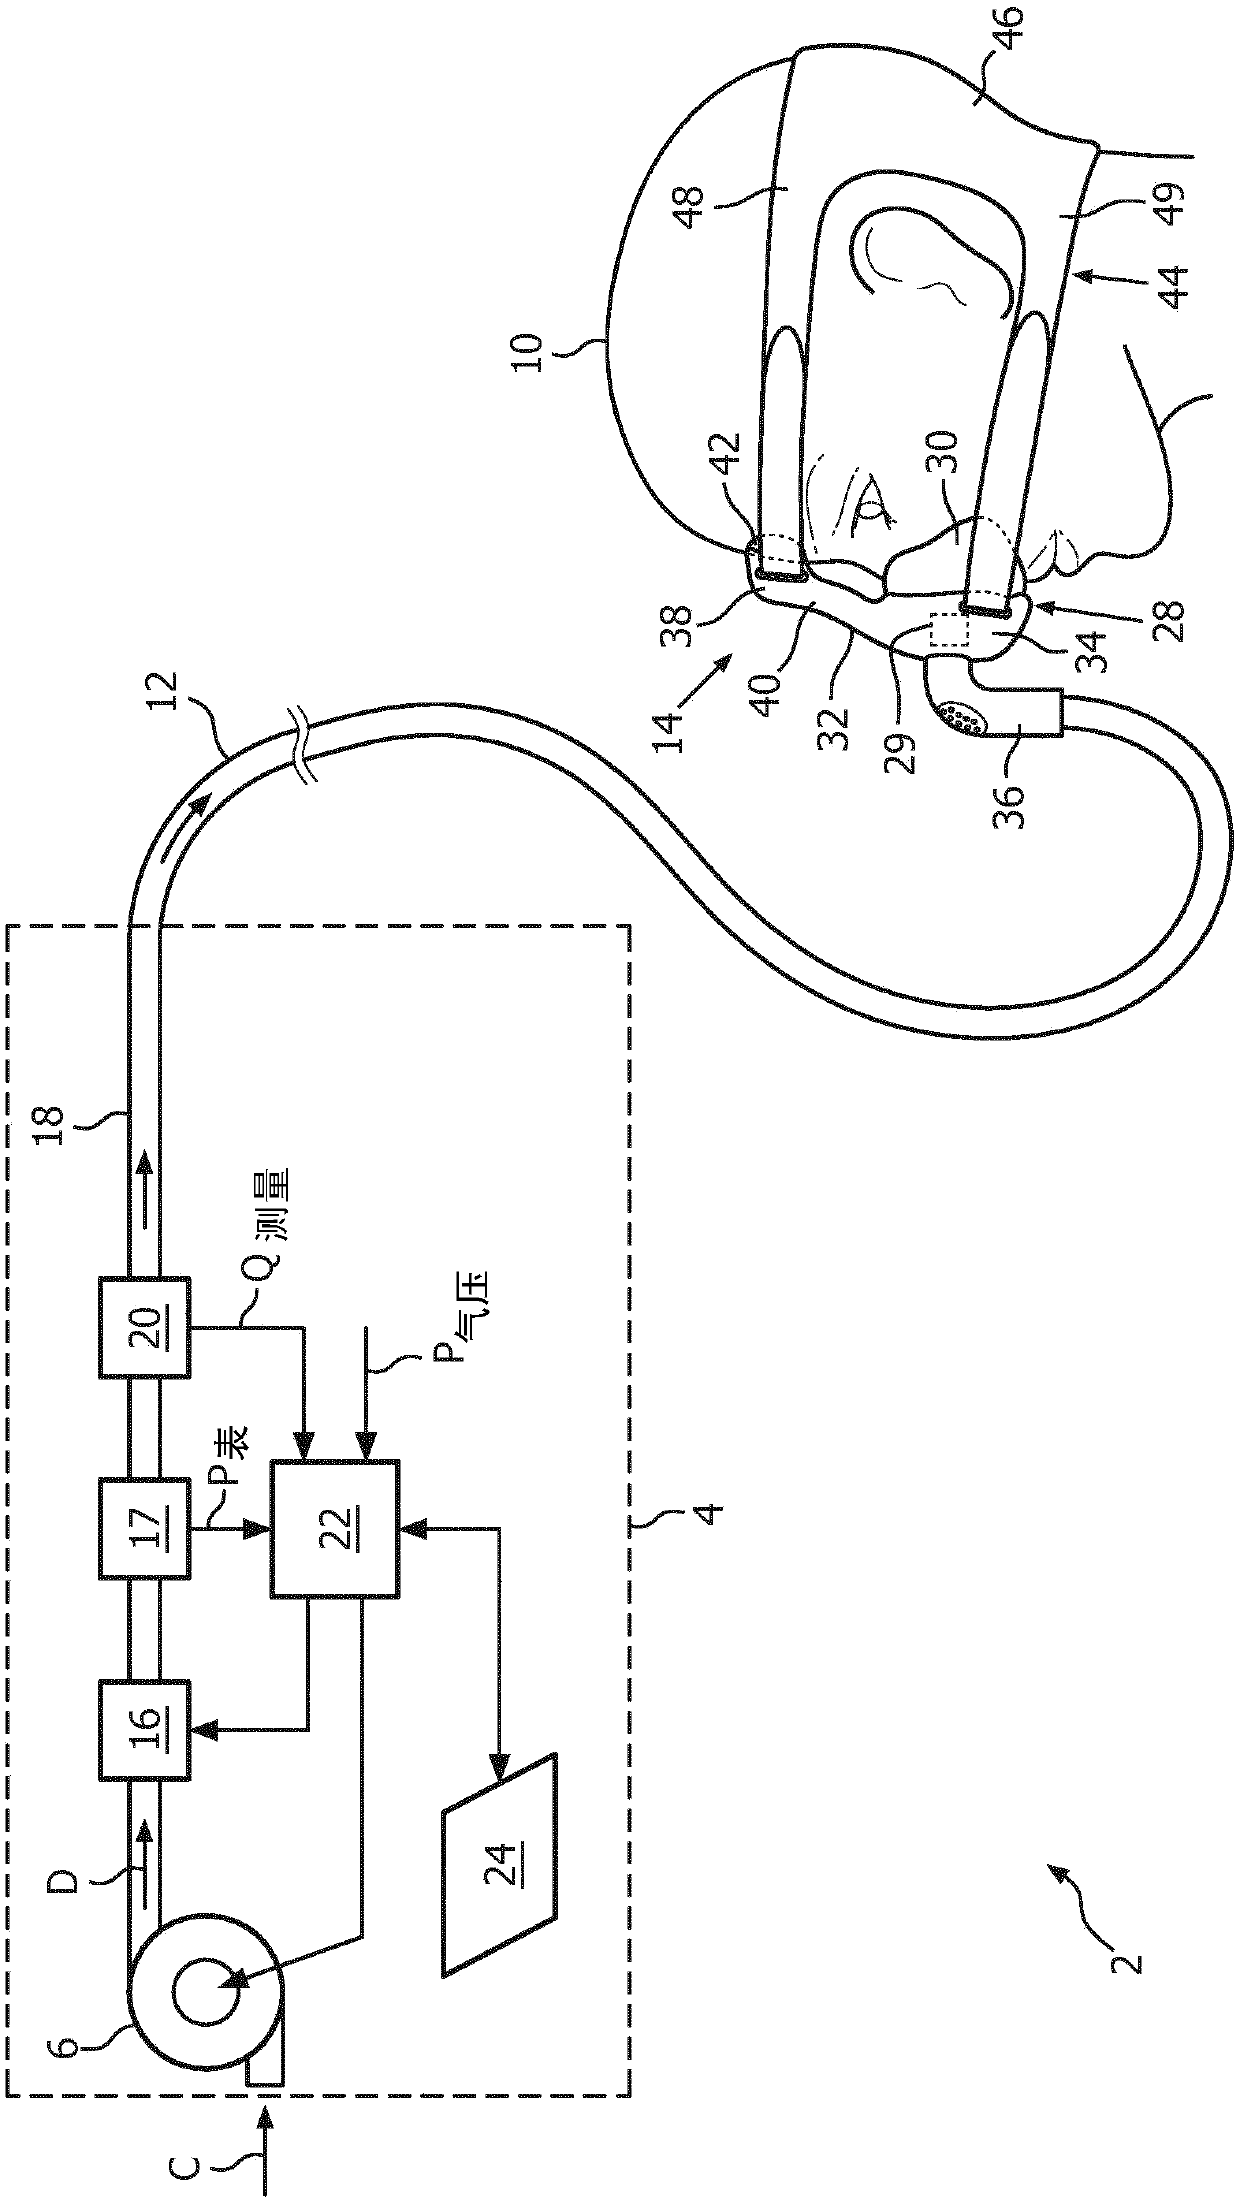 Barometric pressure sensor for variable resistance positive airway pressure device circuit compensation